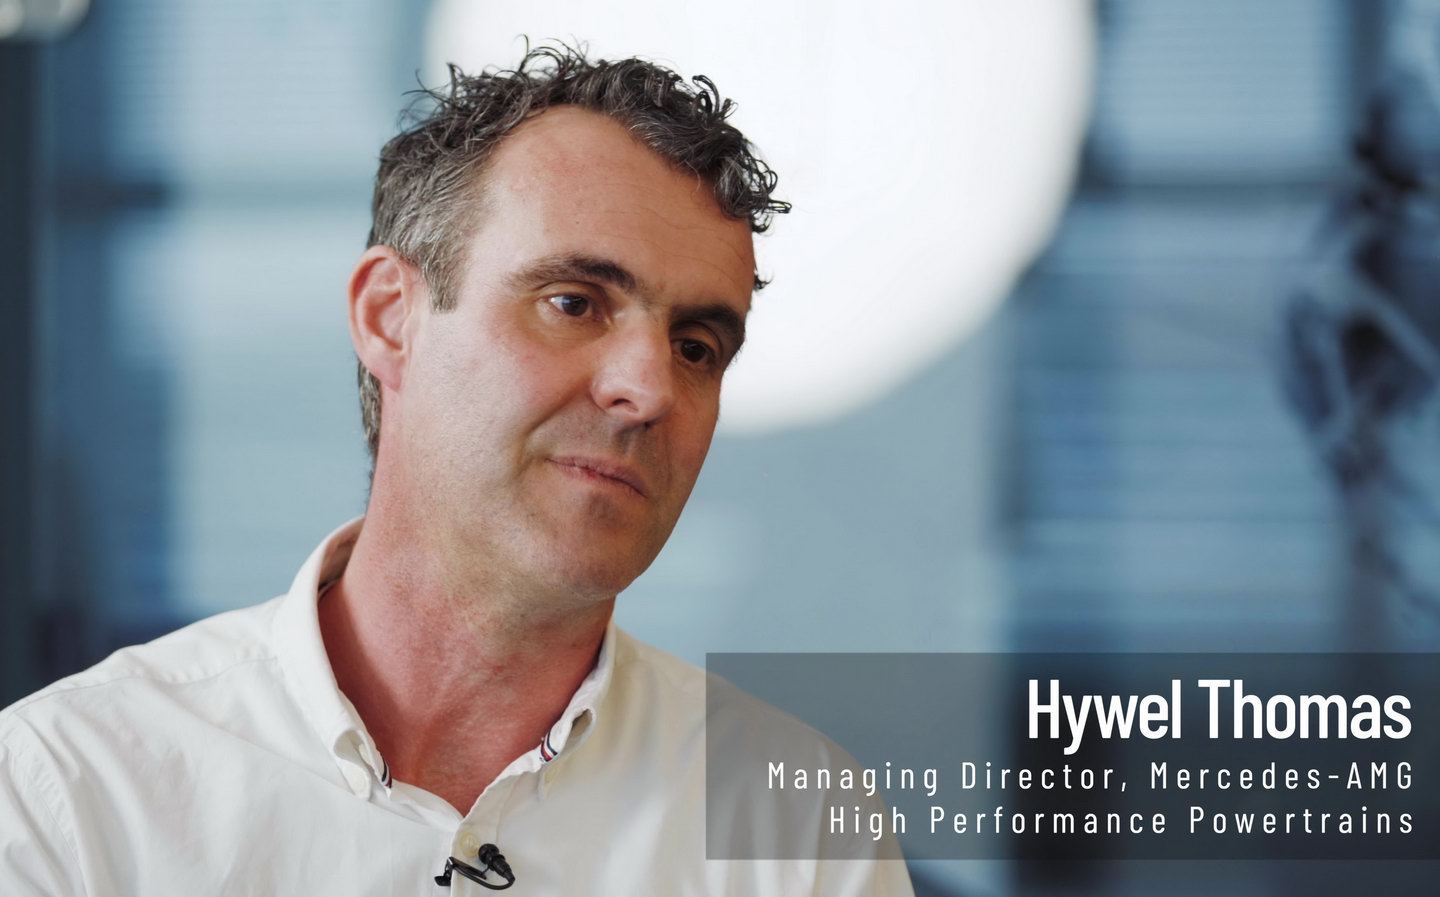 Hywel Thomas, managing director of Mercedes-AMG HPP